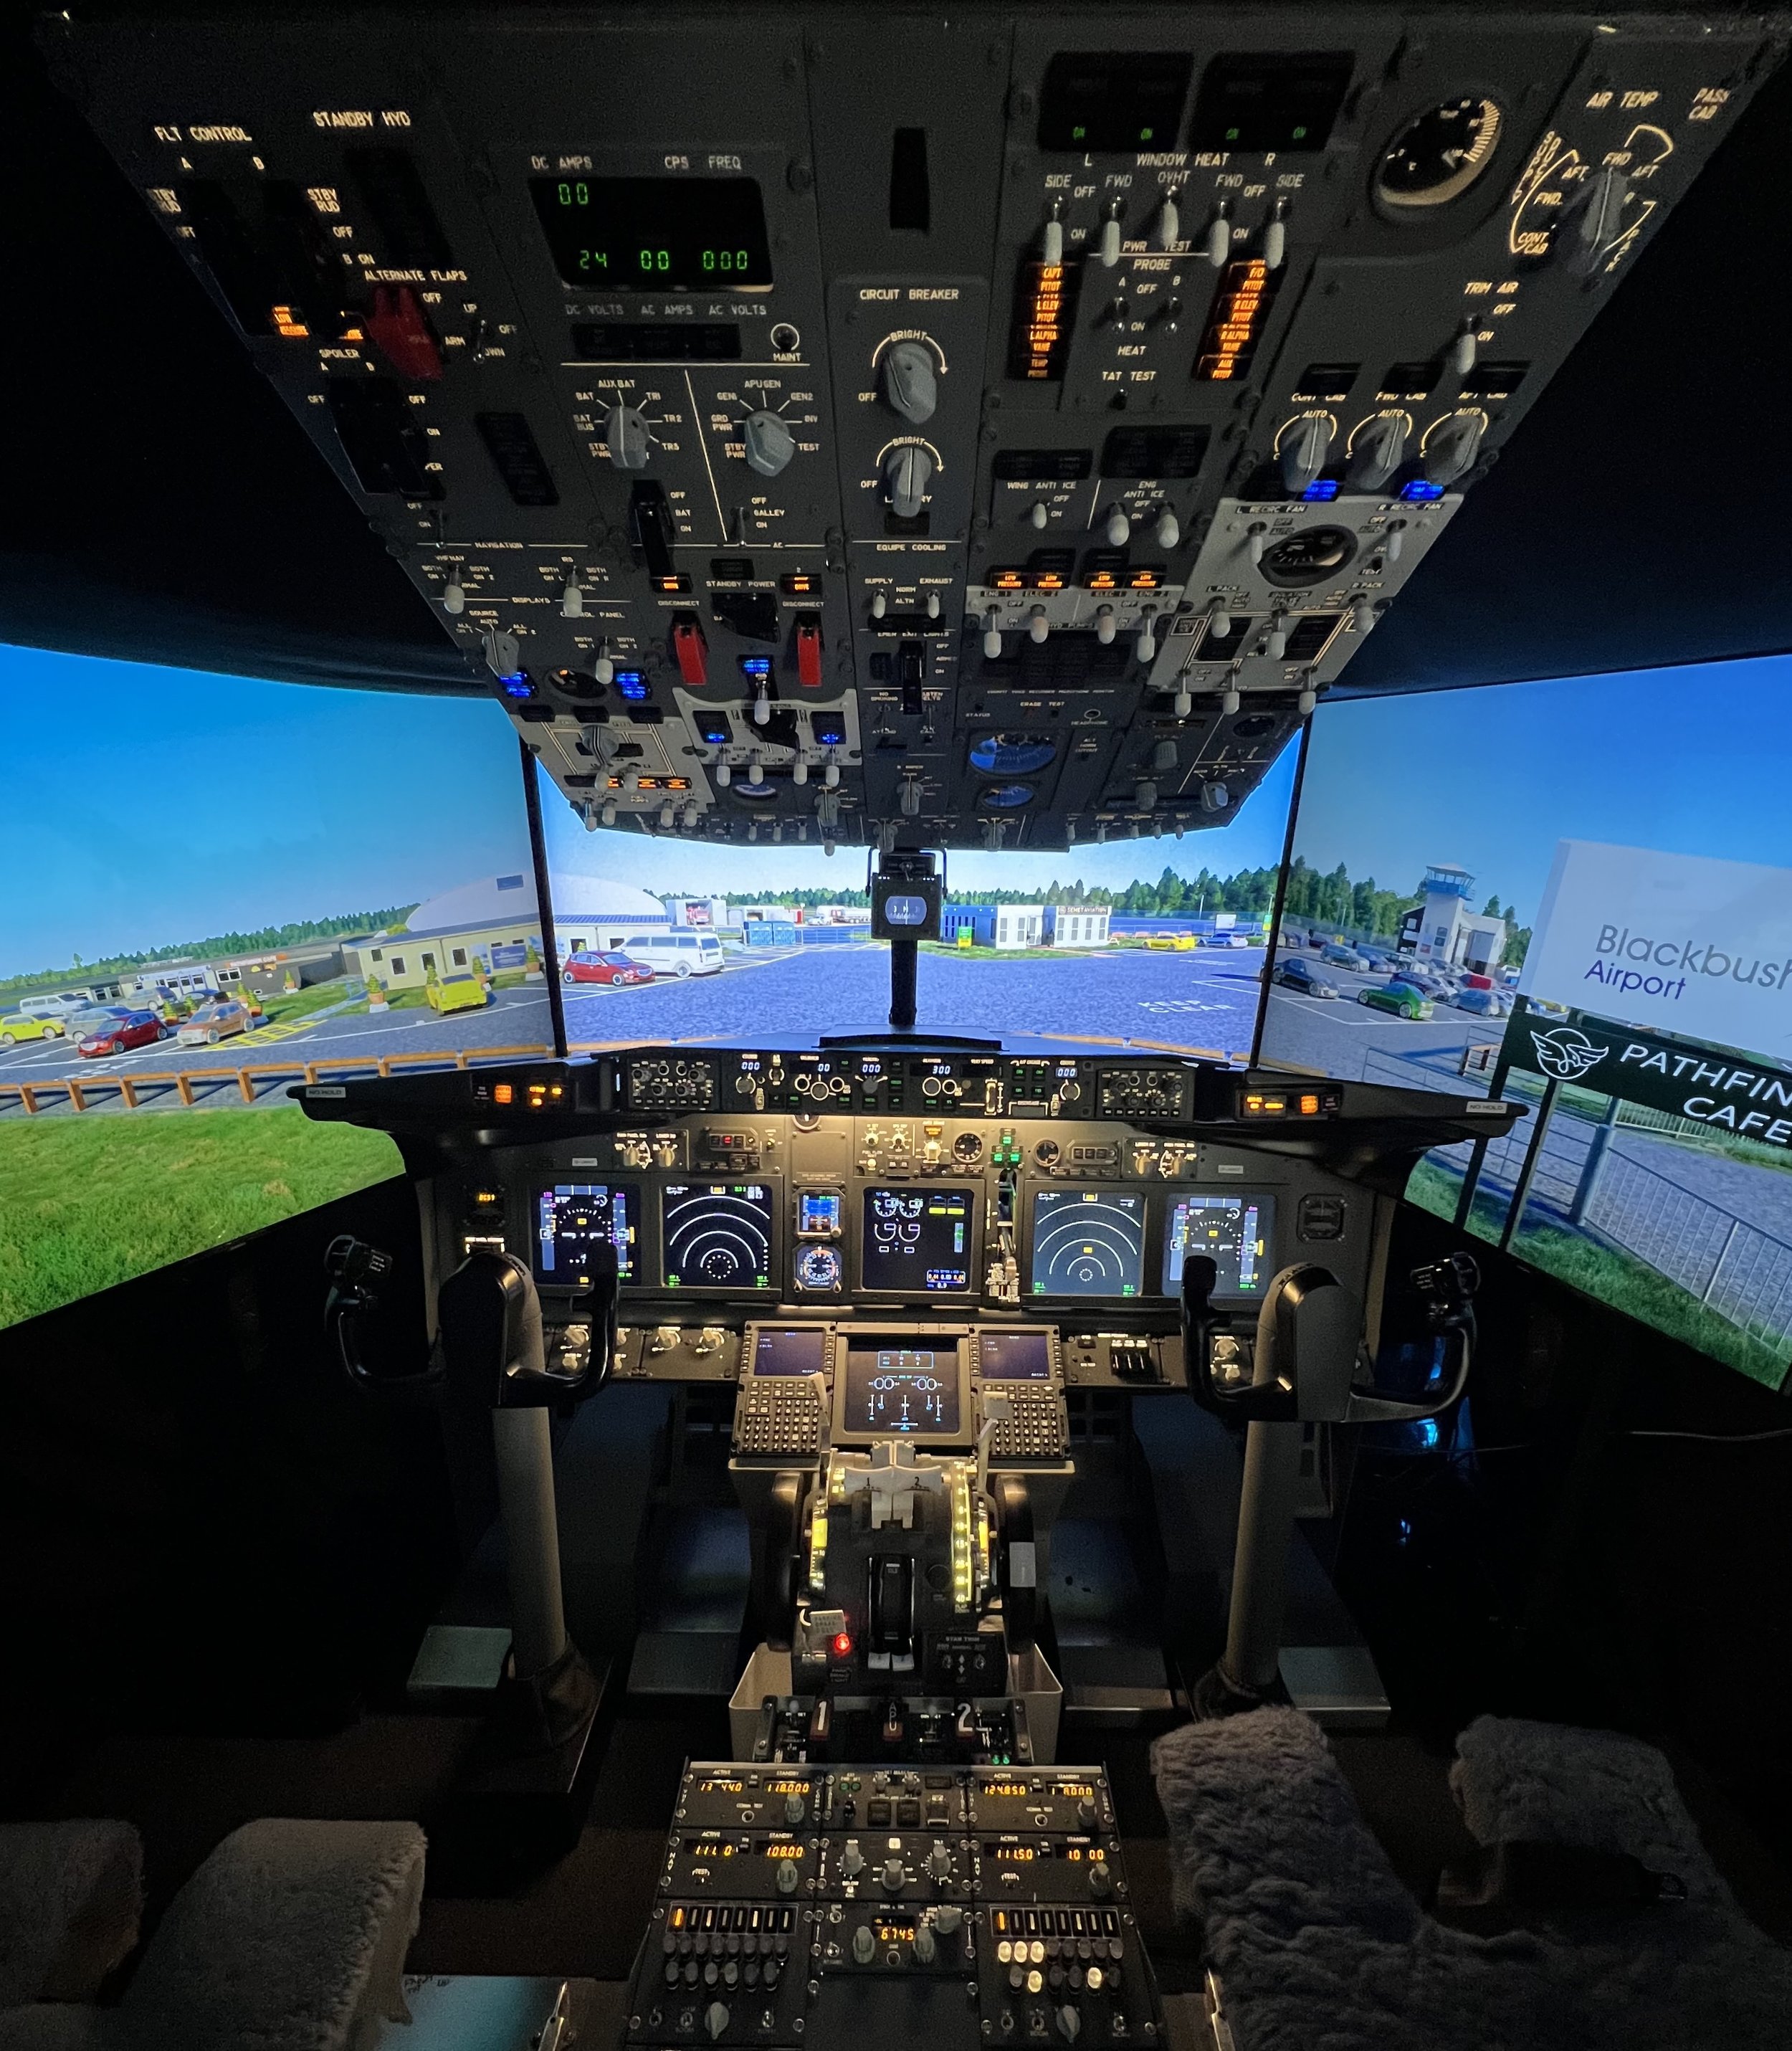 Flight Simulator Experience — Airline Experience